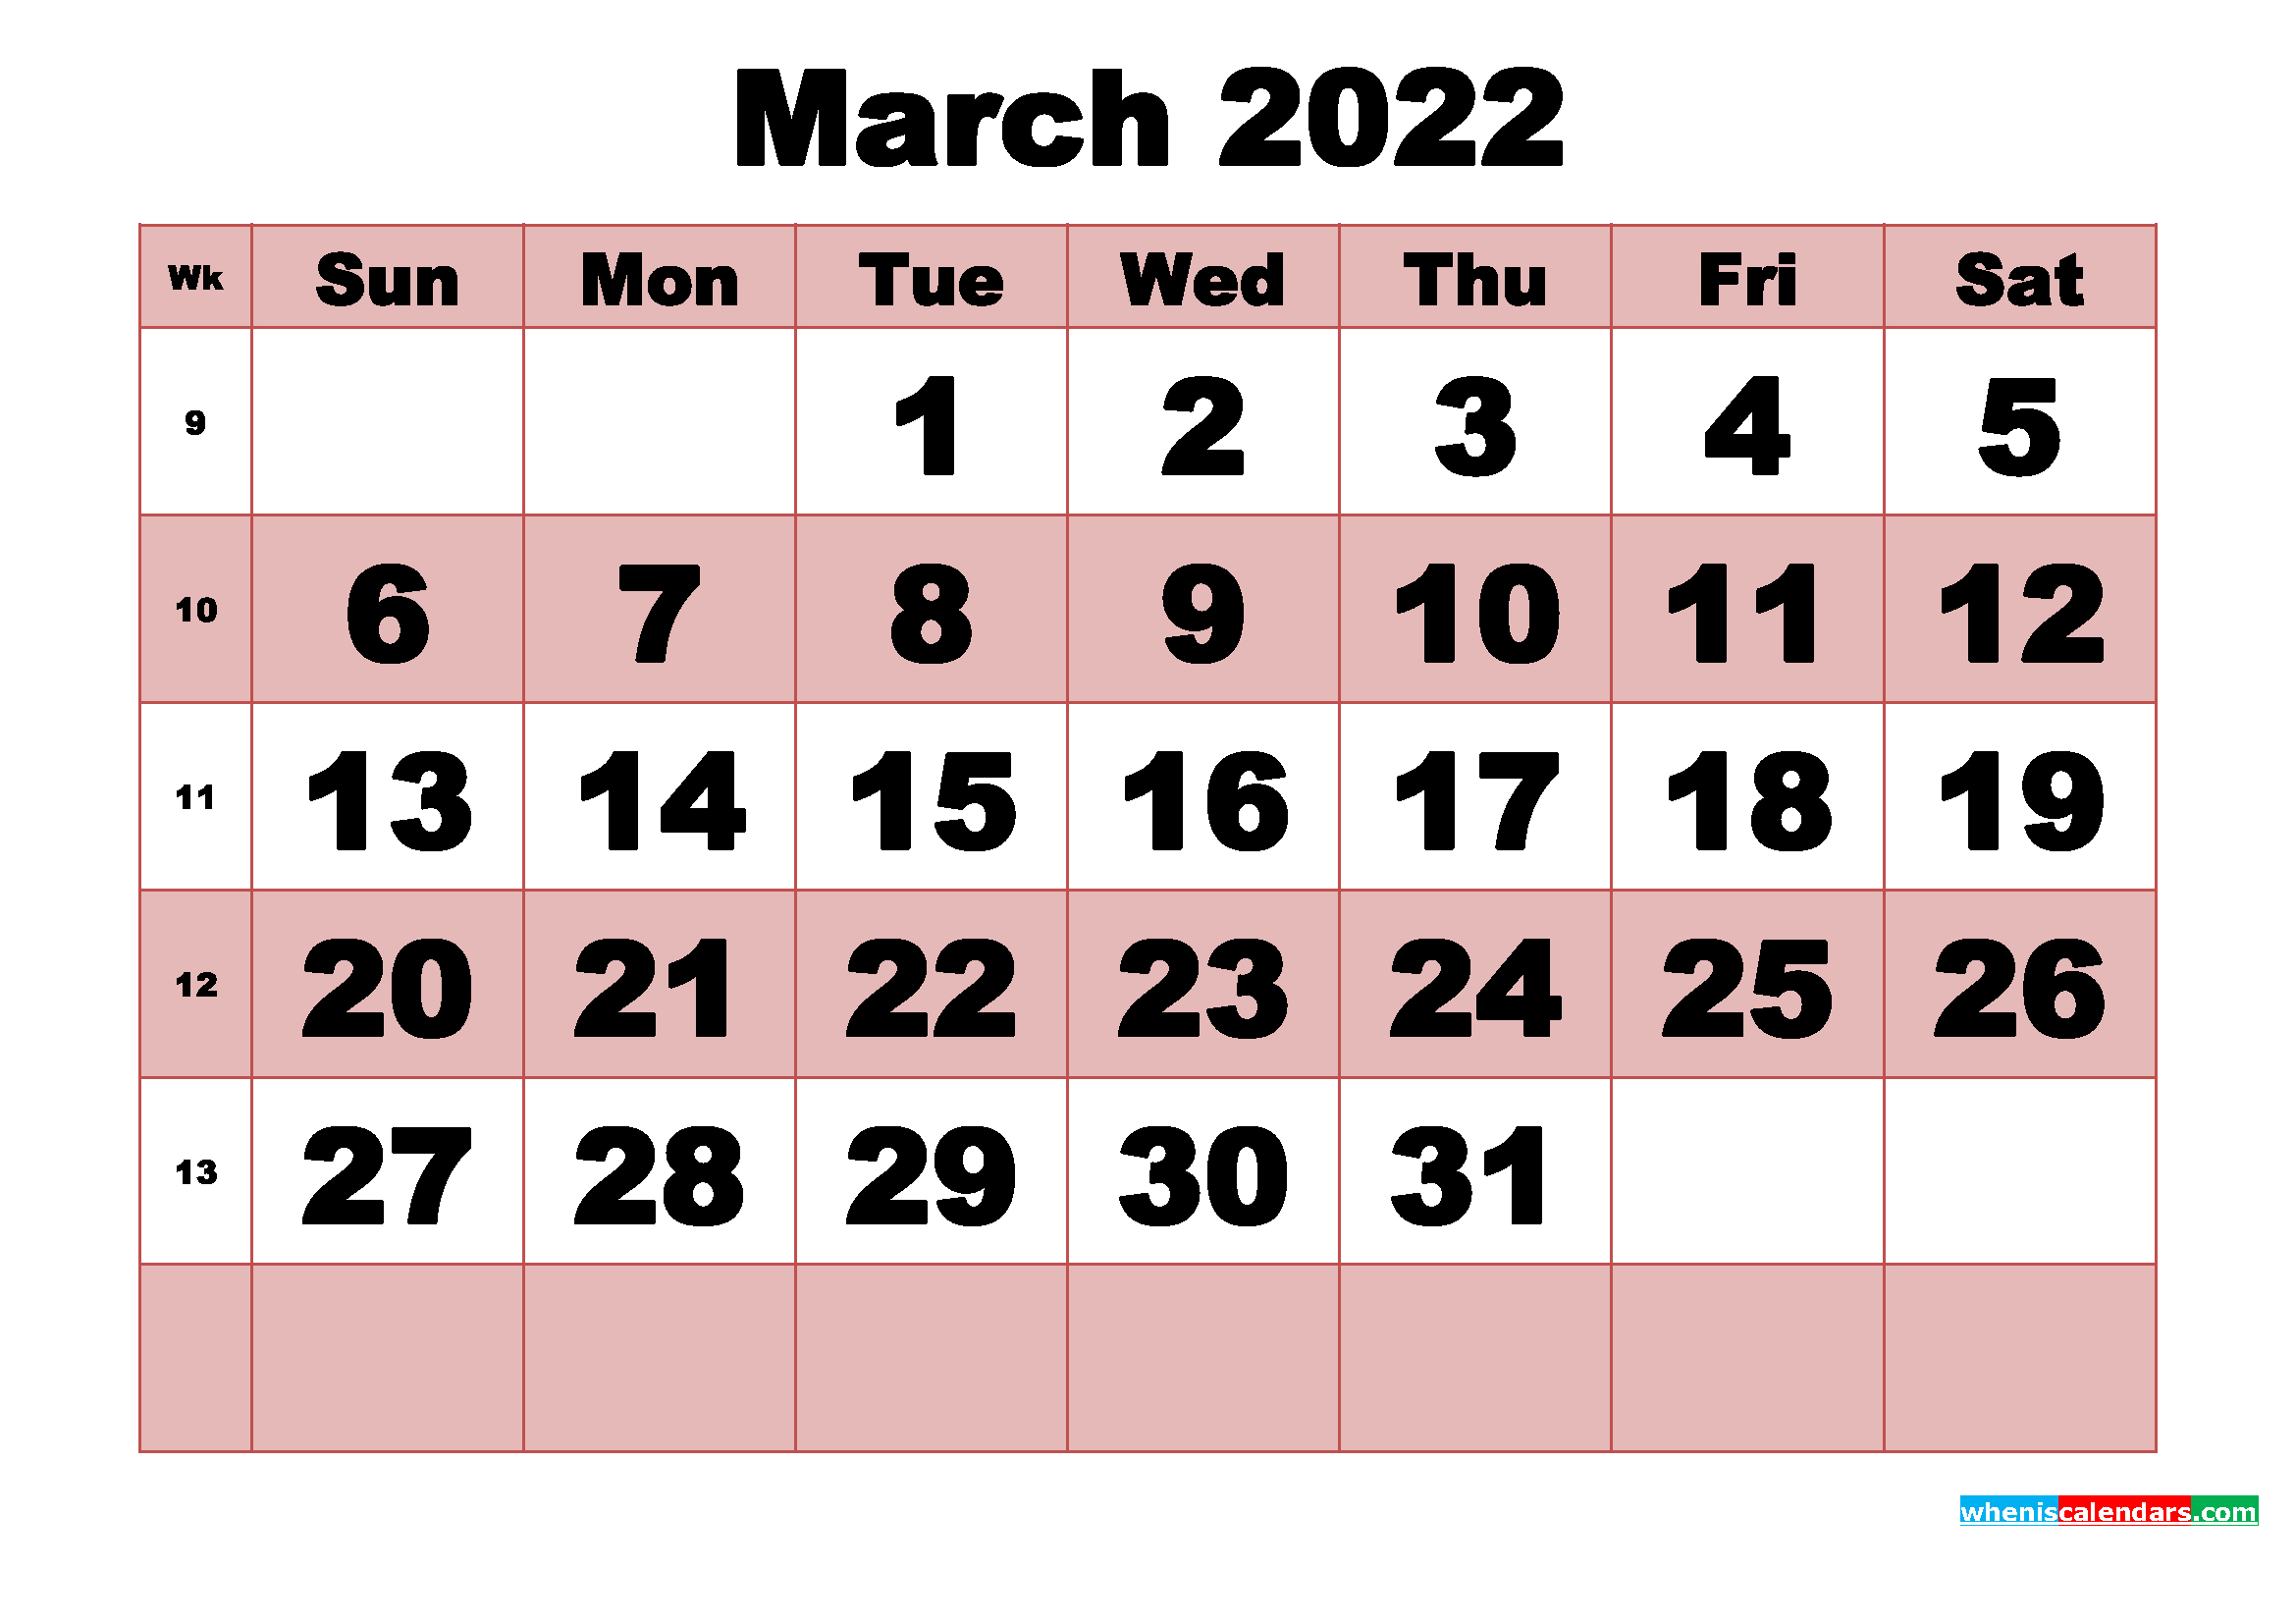 Catch 2022 Calendar For March